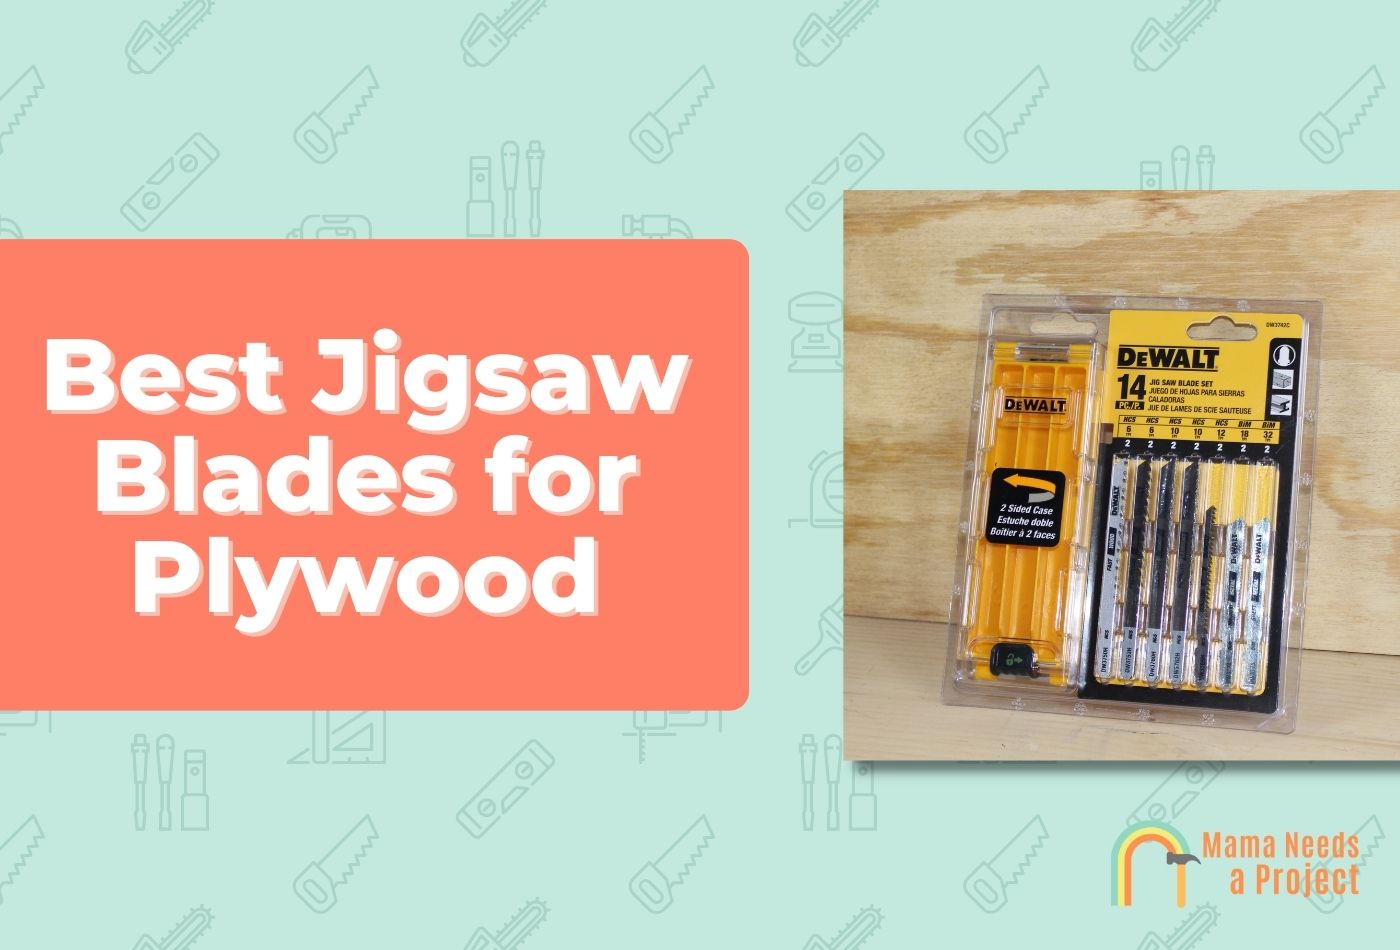 Best Jigsaw Blades for Plywood